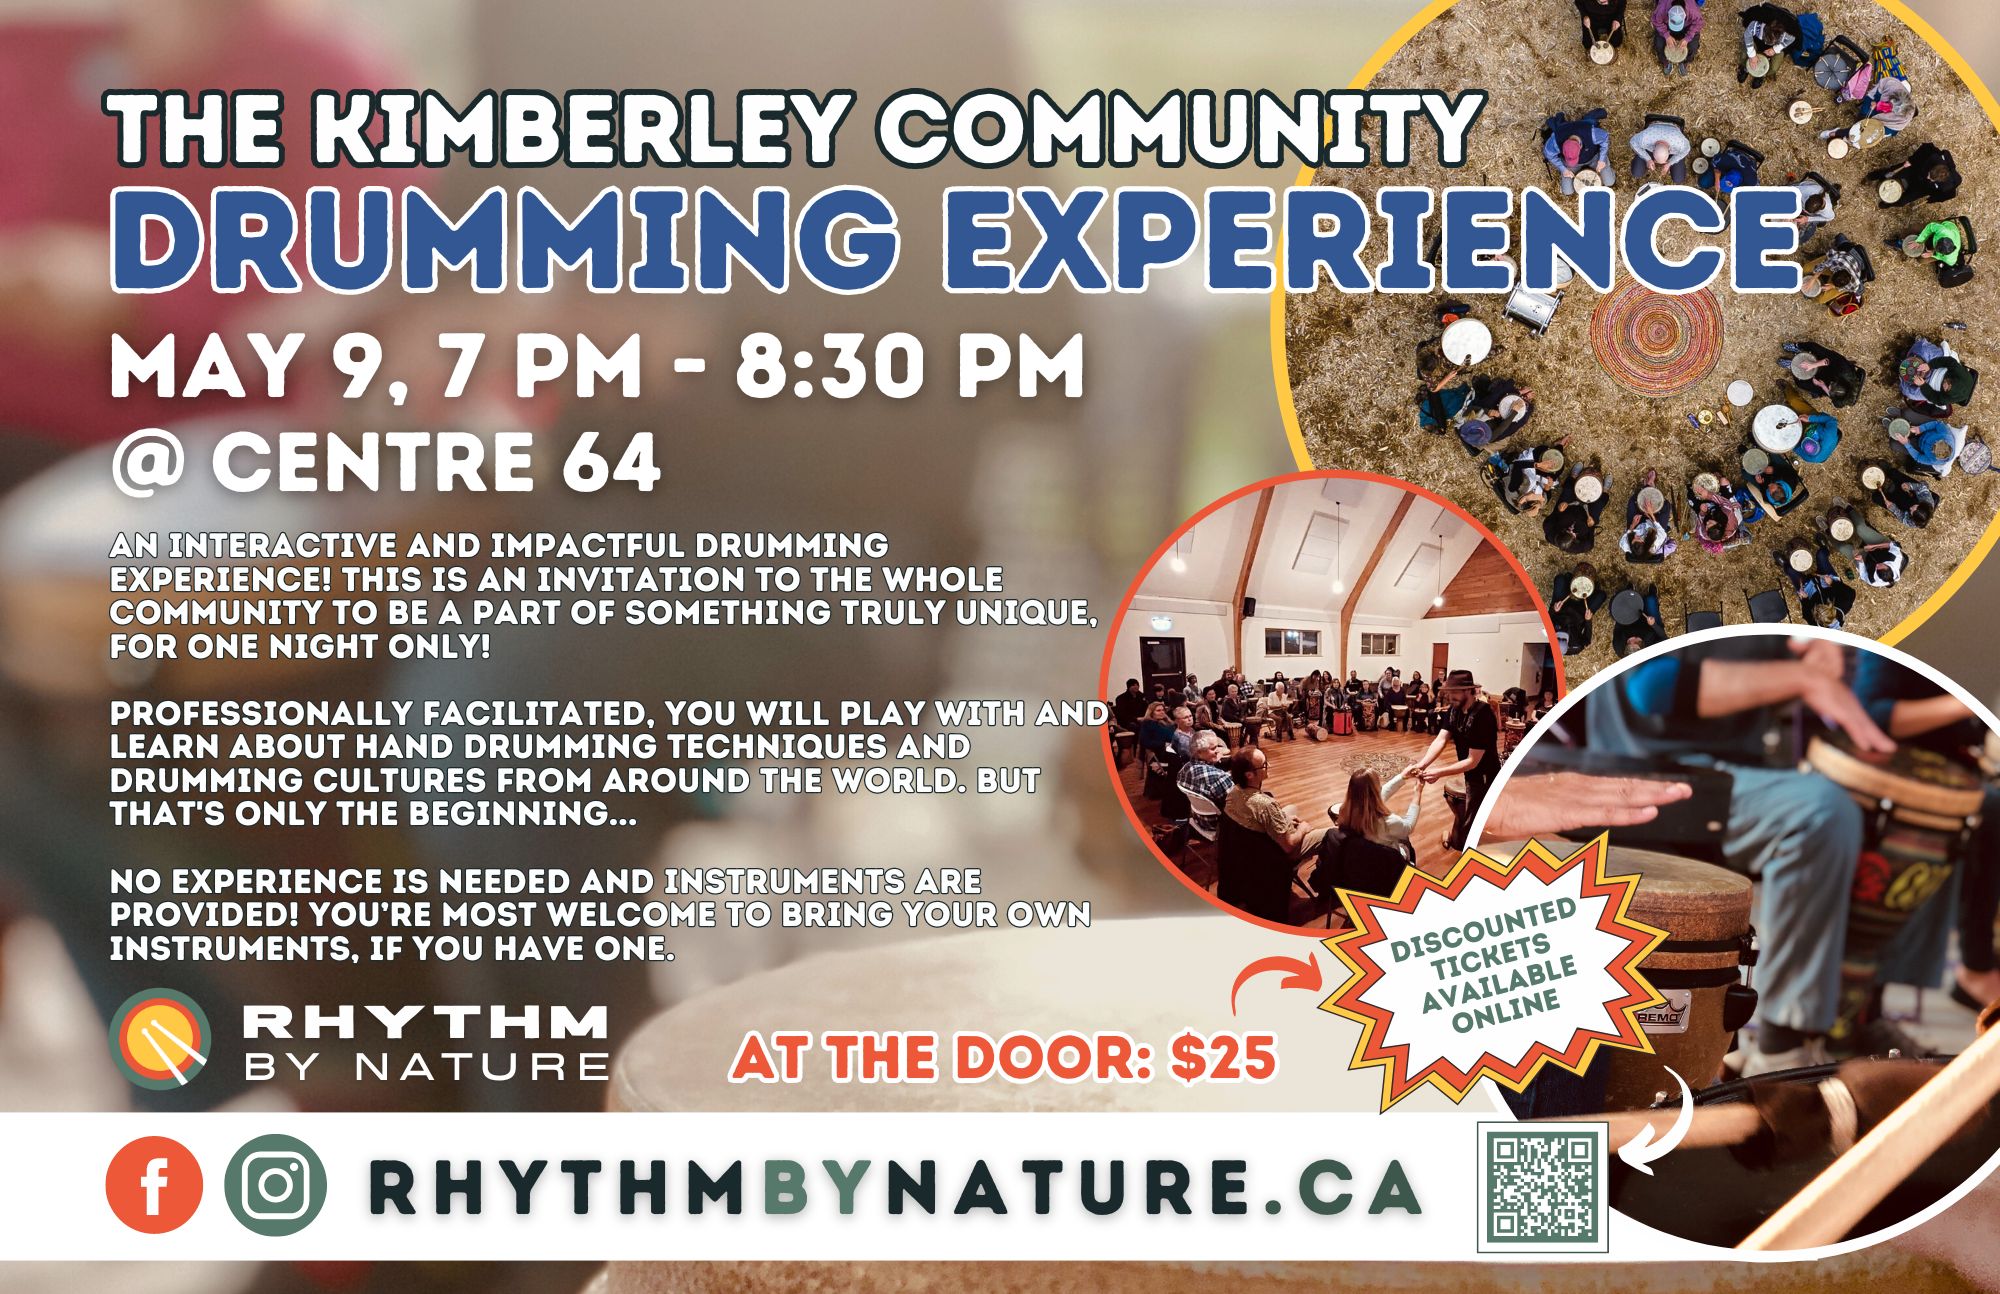 Kimberley Community Drumming Experience